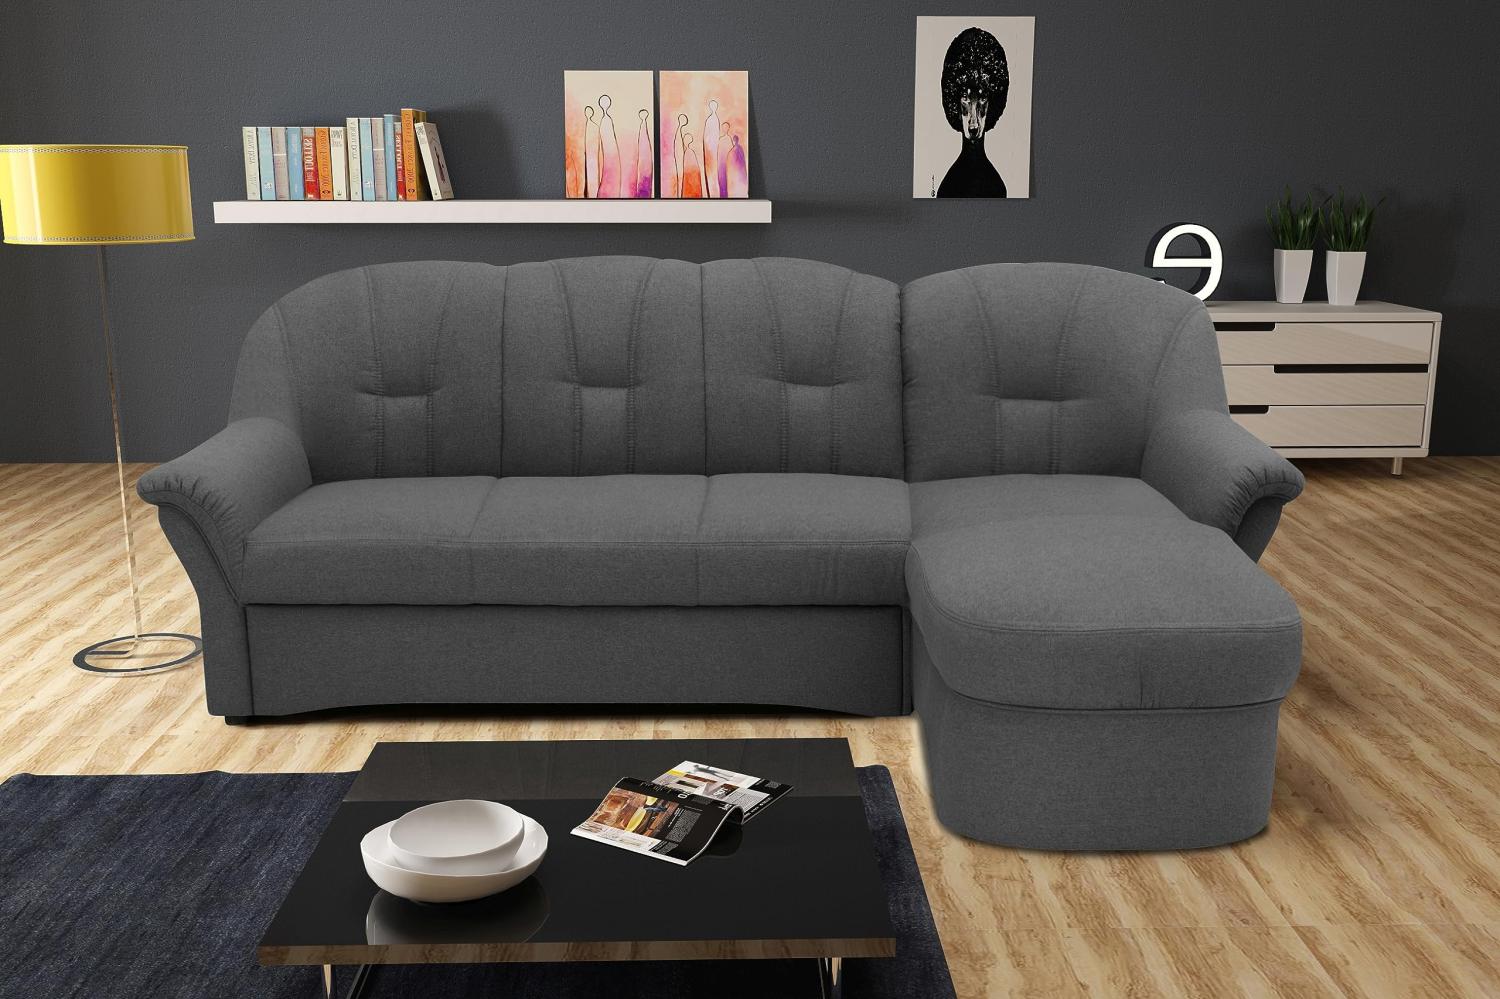 DOMO Collection Puno Ecksofa, Sofa in L-Form, Eckcouch, Sofa, Couch mit Longchair, 233 x 142 cm, Polstermöbel in grau Bild 1